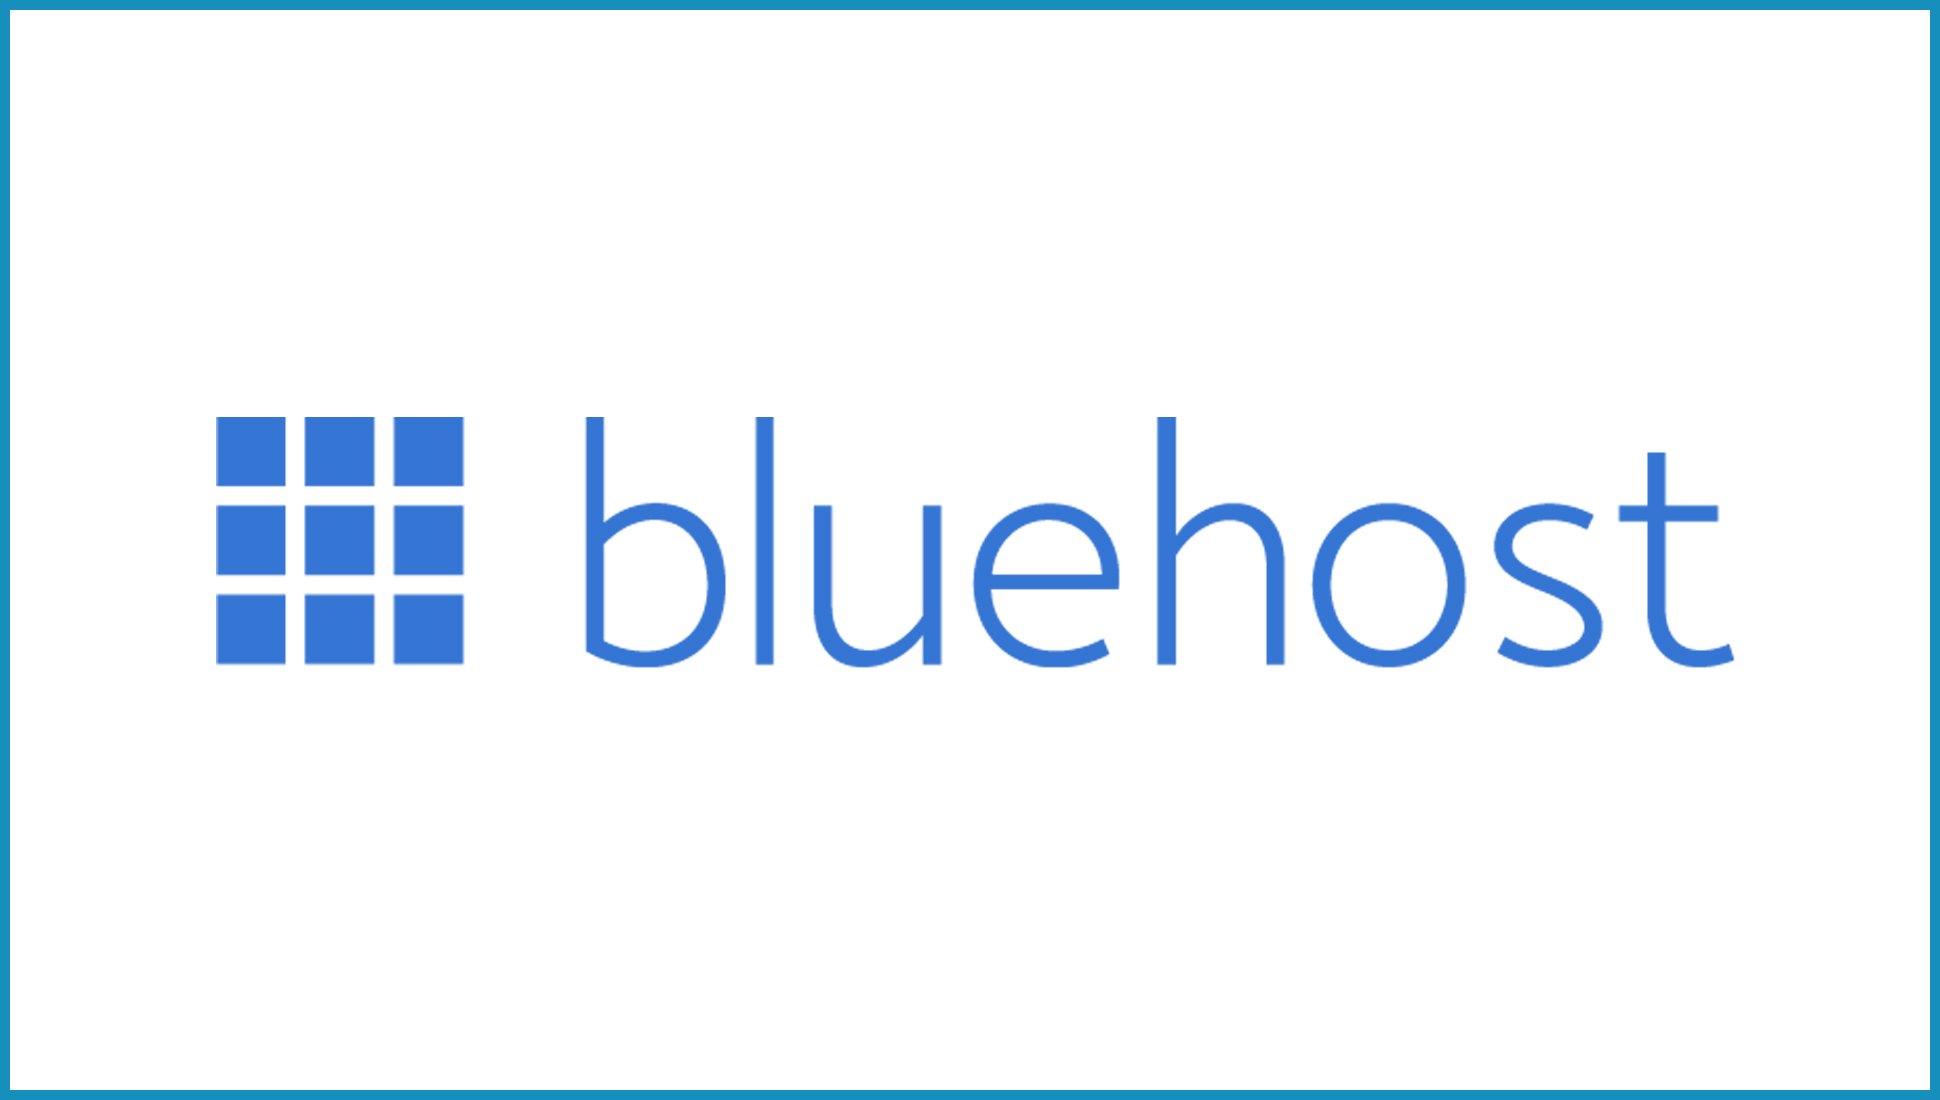 Bluehost logosu